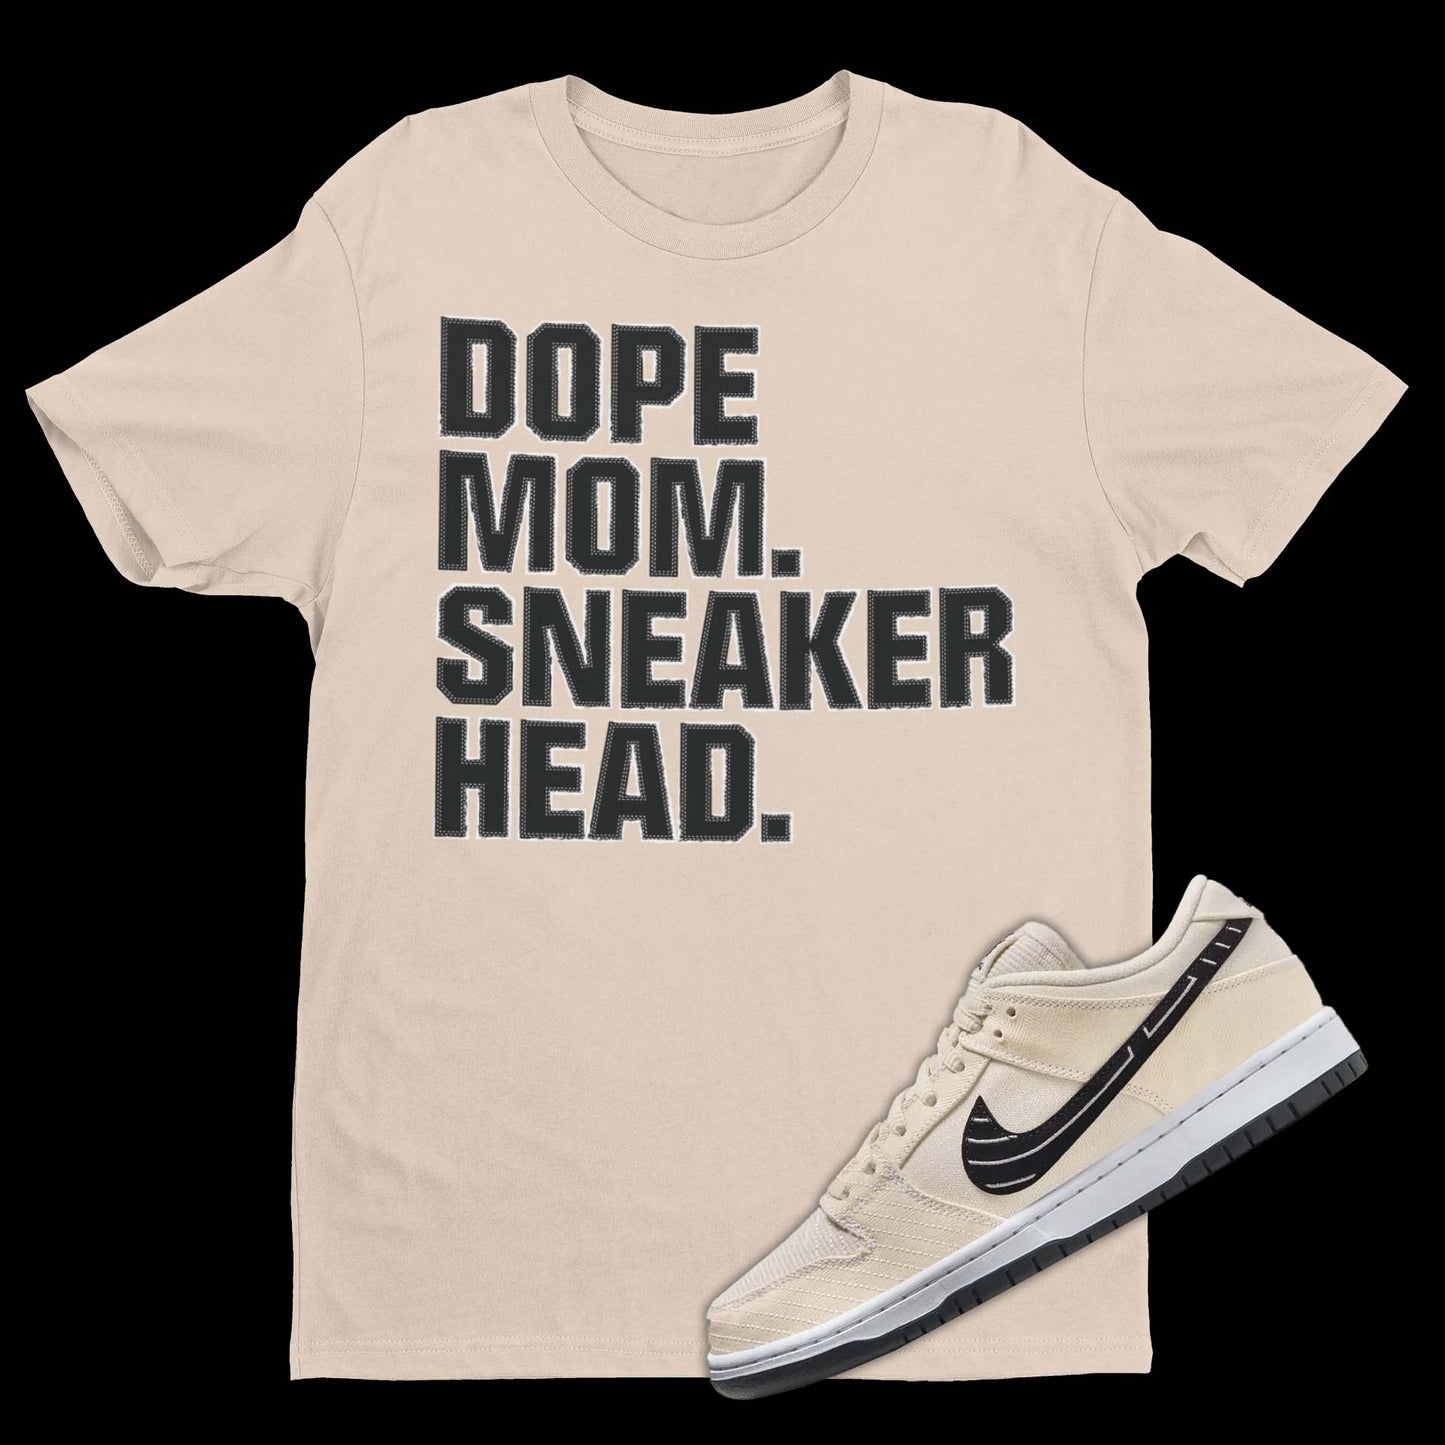 Dope Mom Sneakerhead Nike Albino & Preto Matching T-Shirt from SNKADX